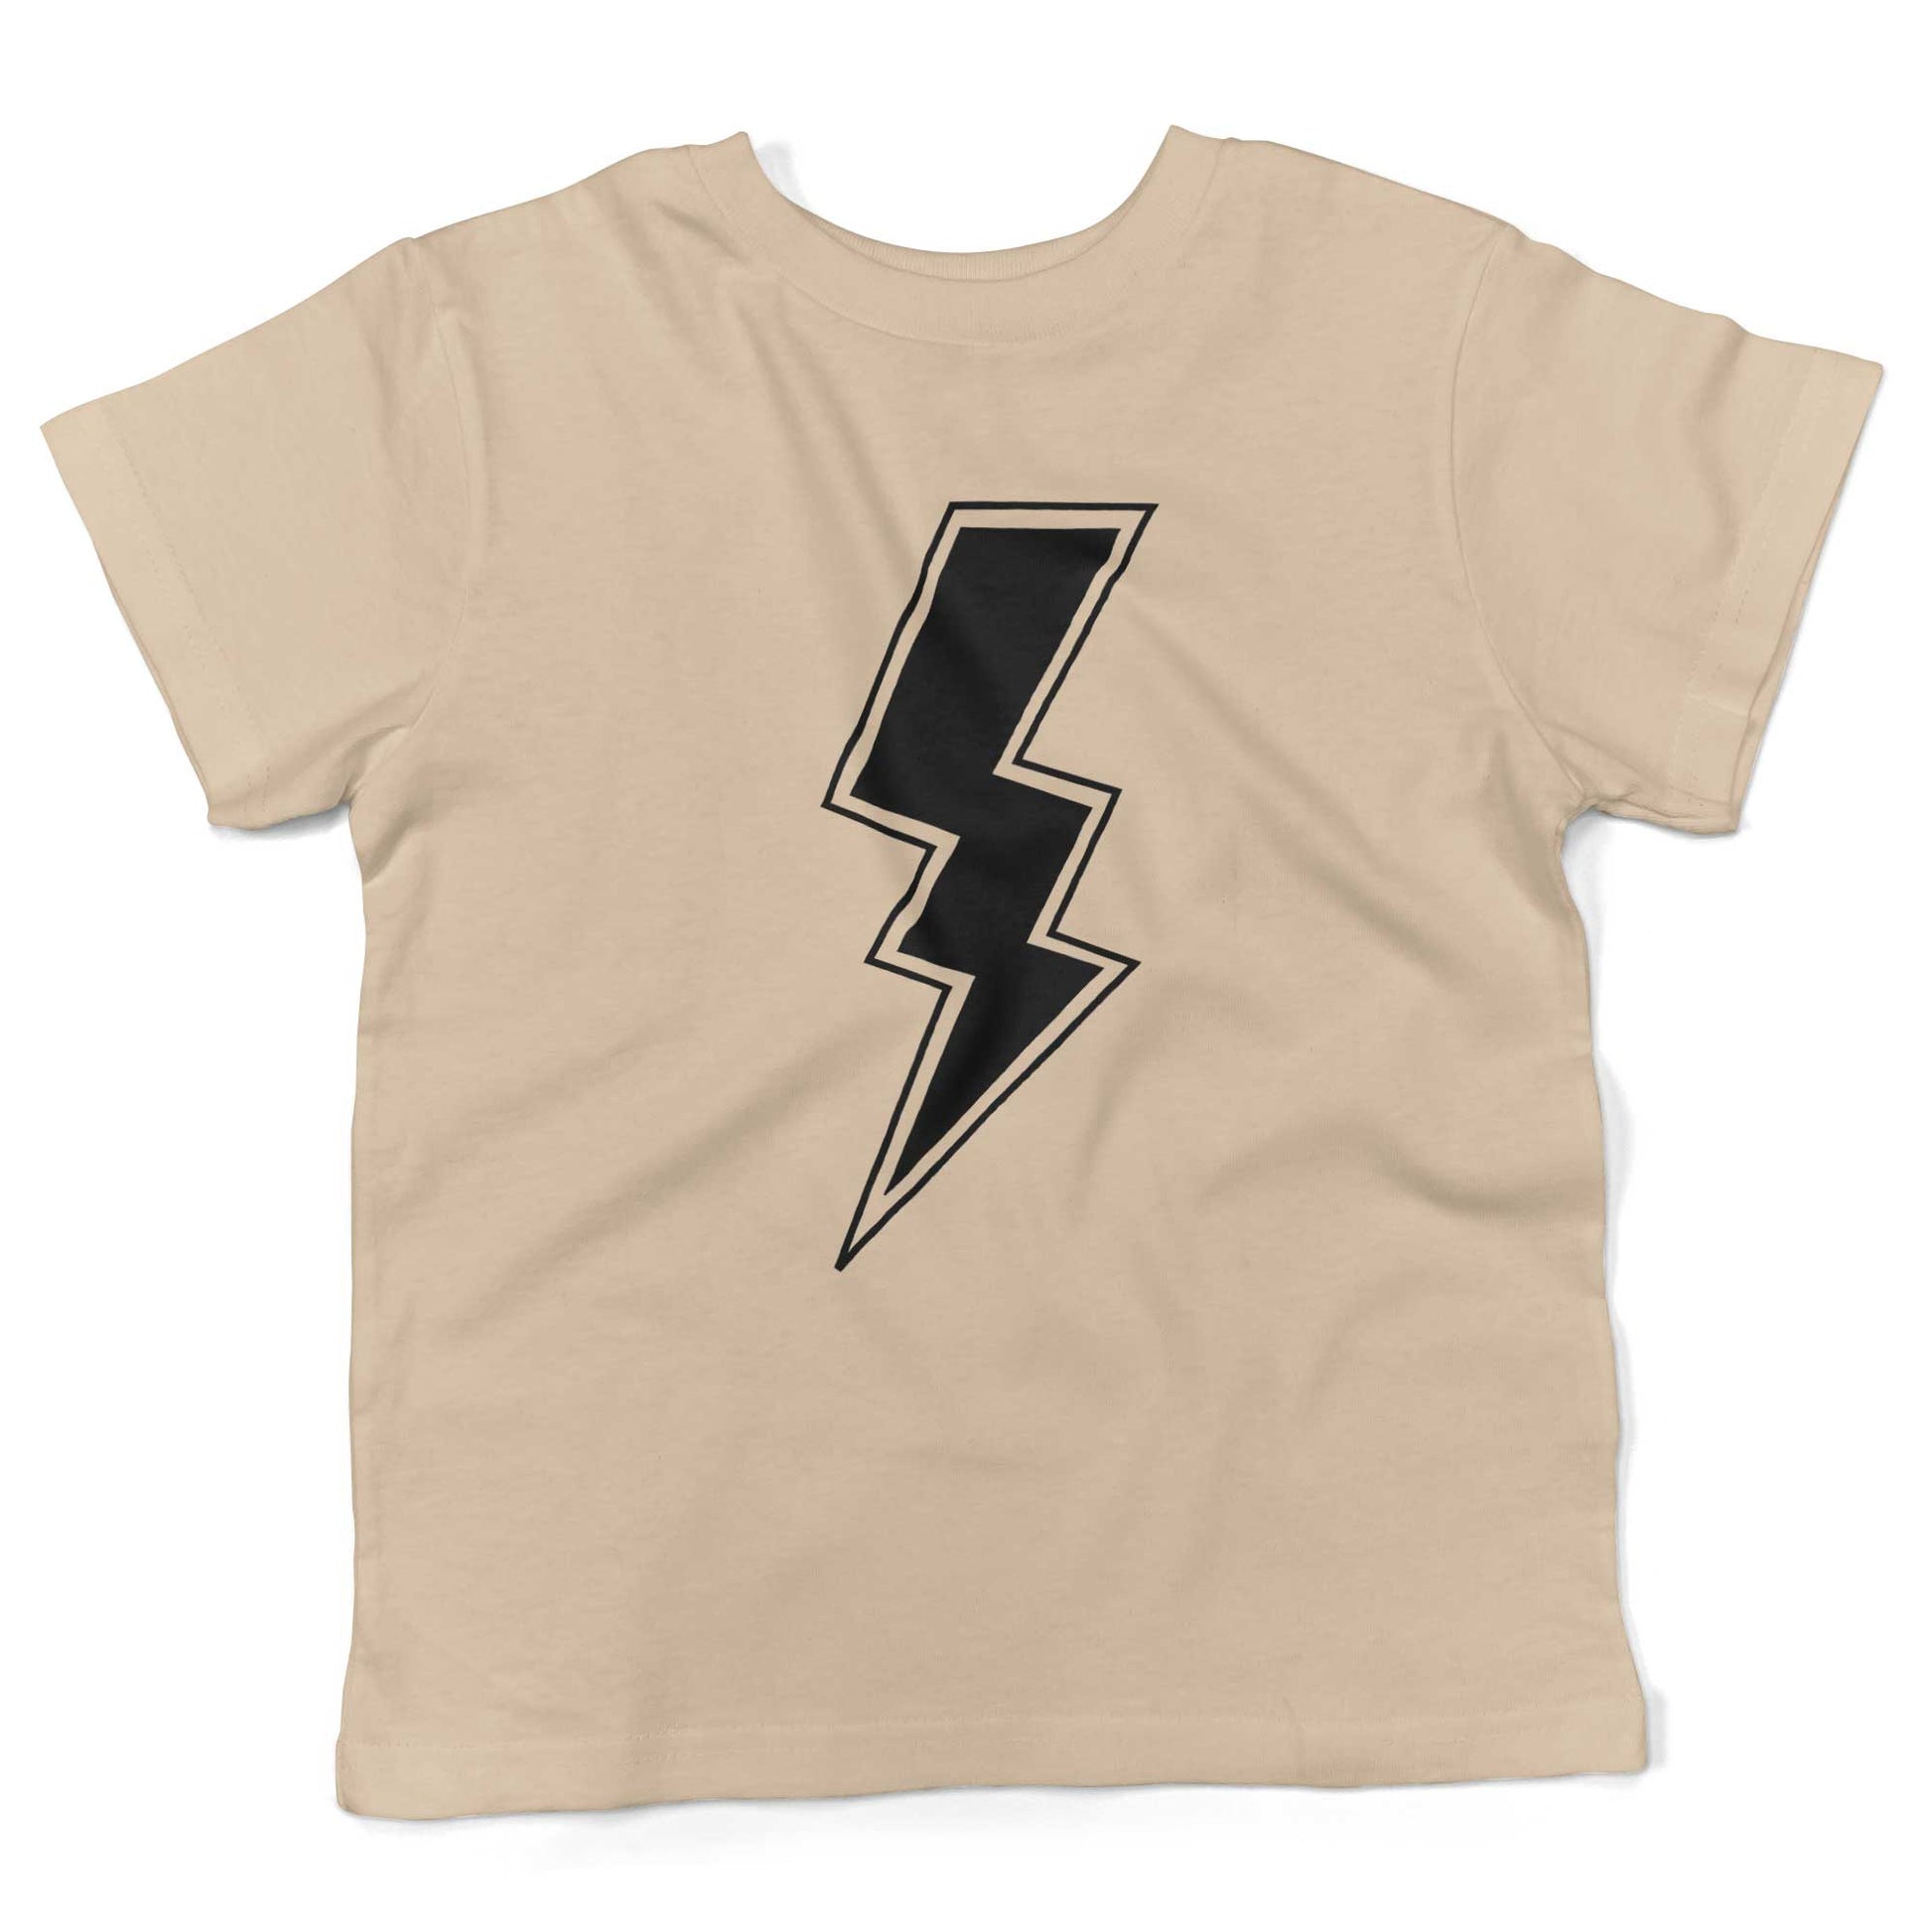 Giant Lightning Bolt Toddler Shirt-Organic Natural-2T